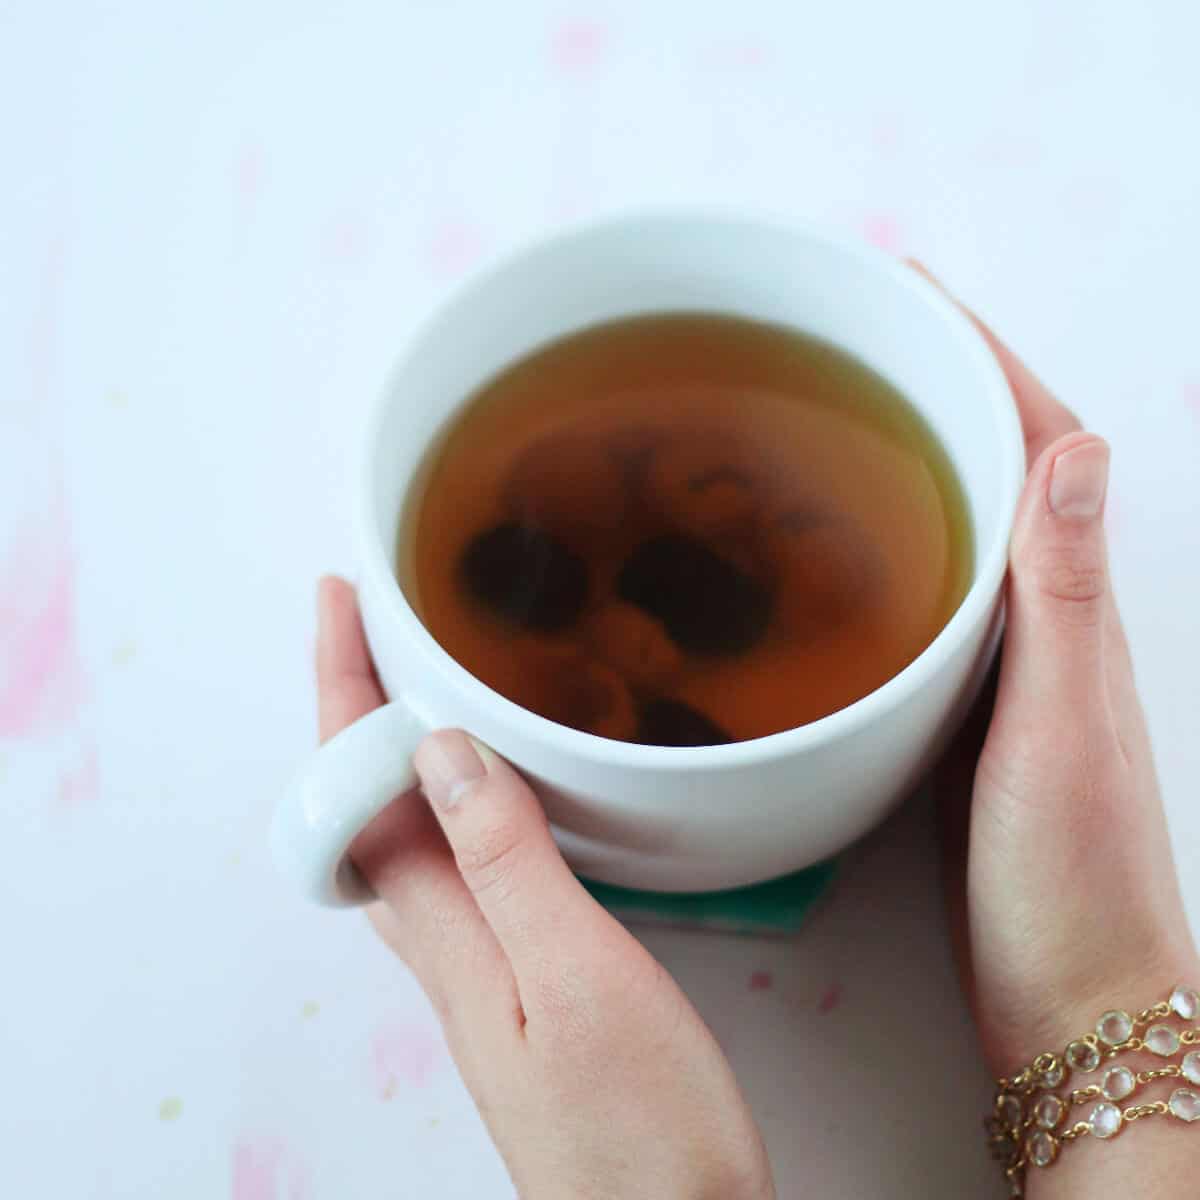 Hands cupping mug of reddish brown tea.